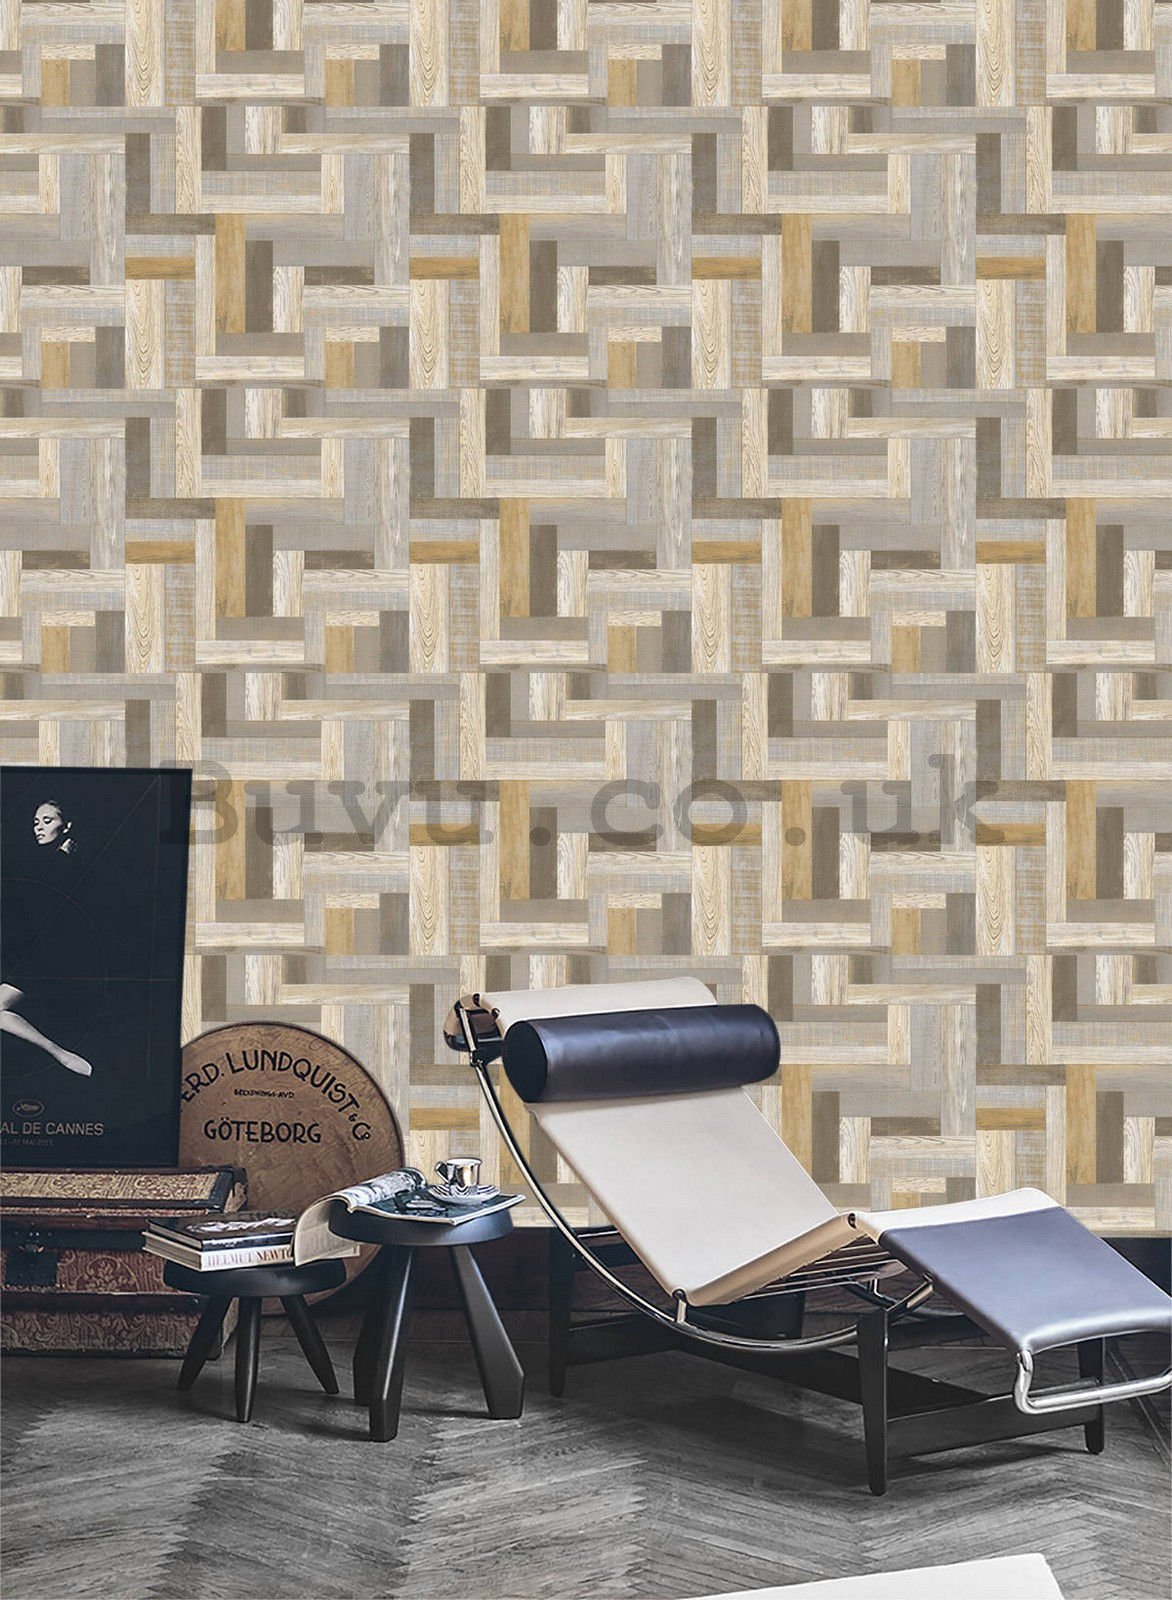 Vinyl wallpaper retro geometric patterns